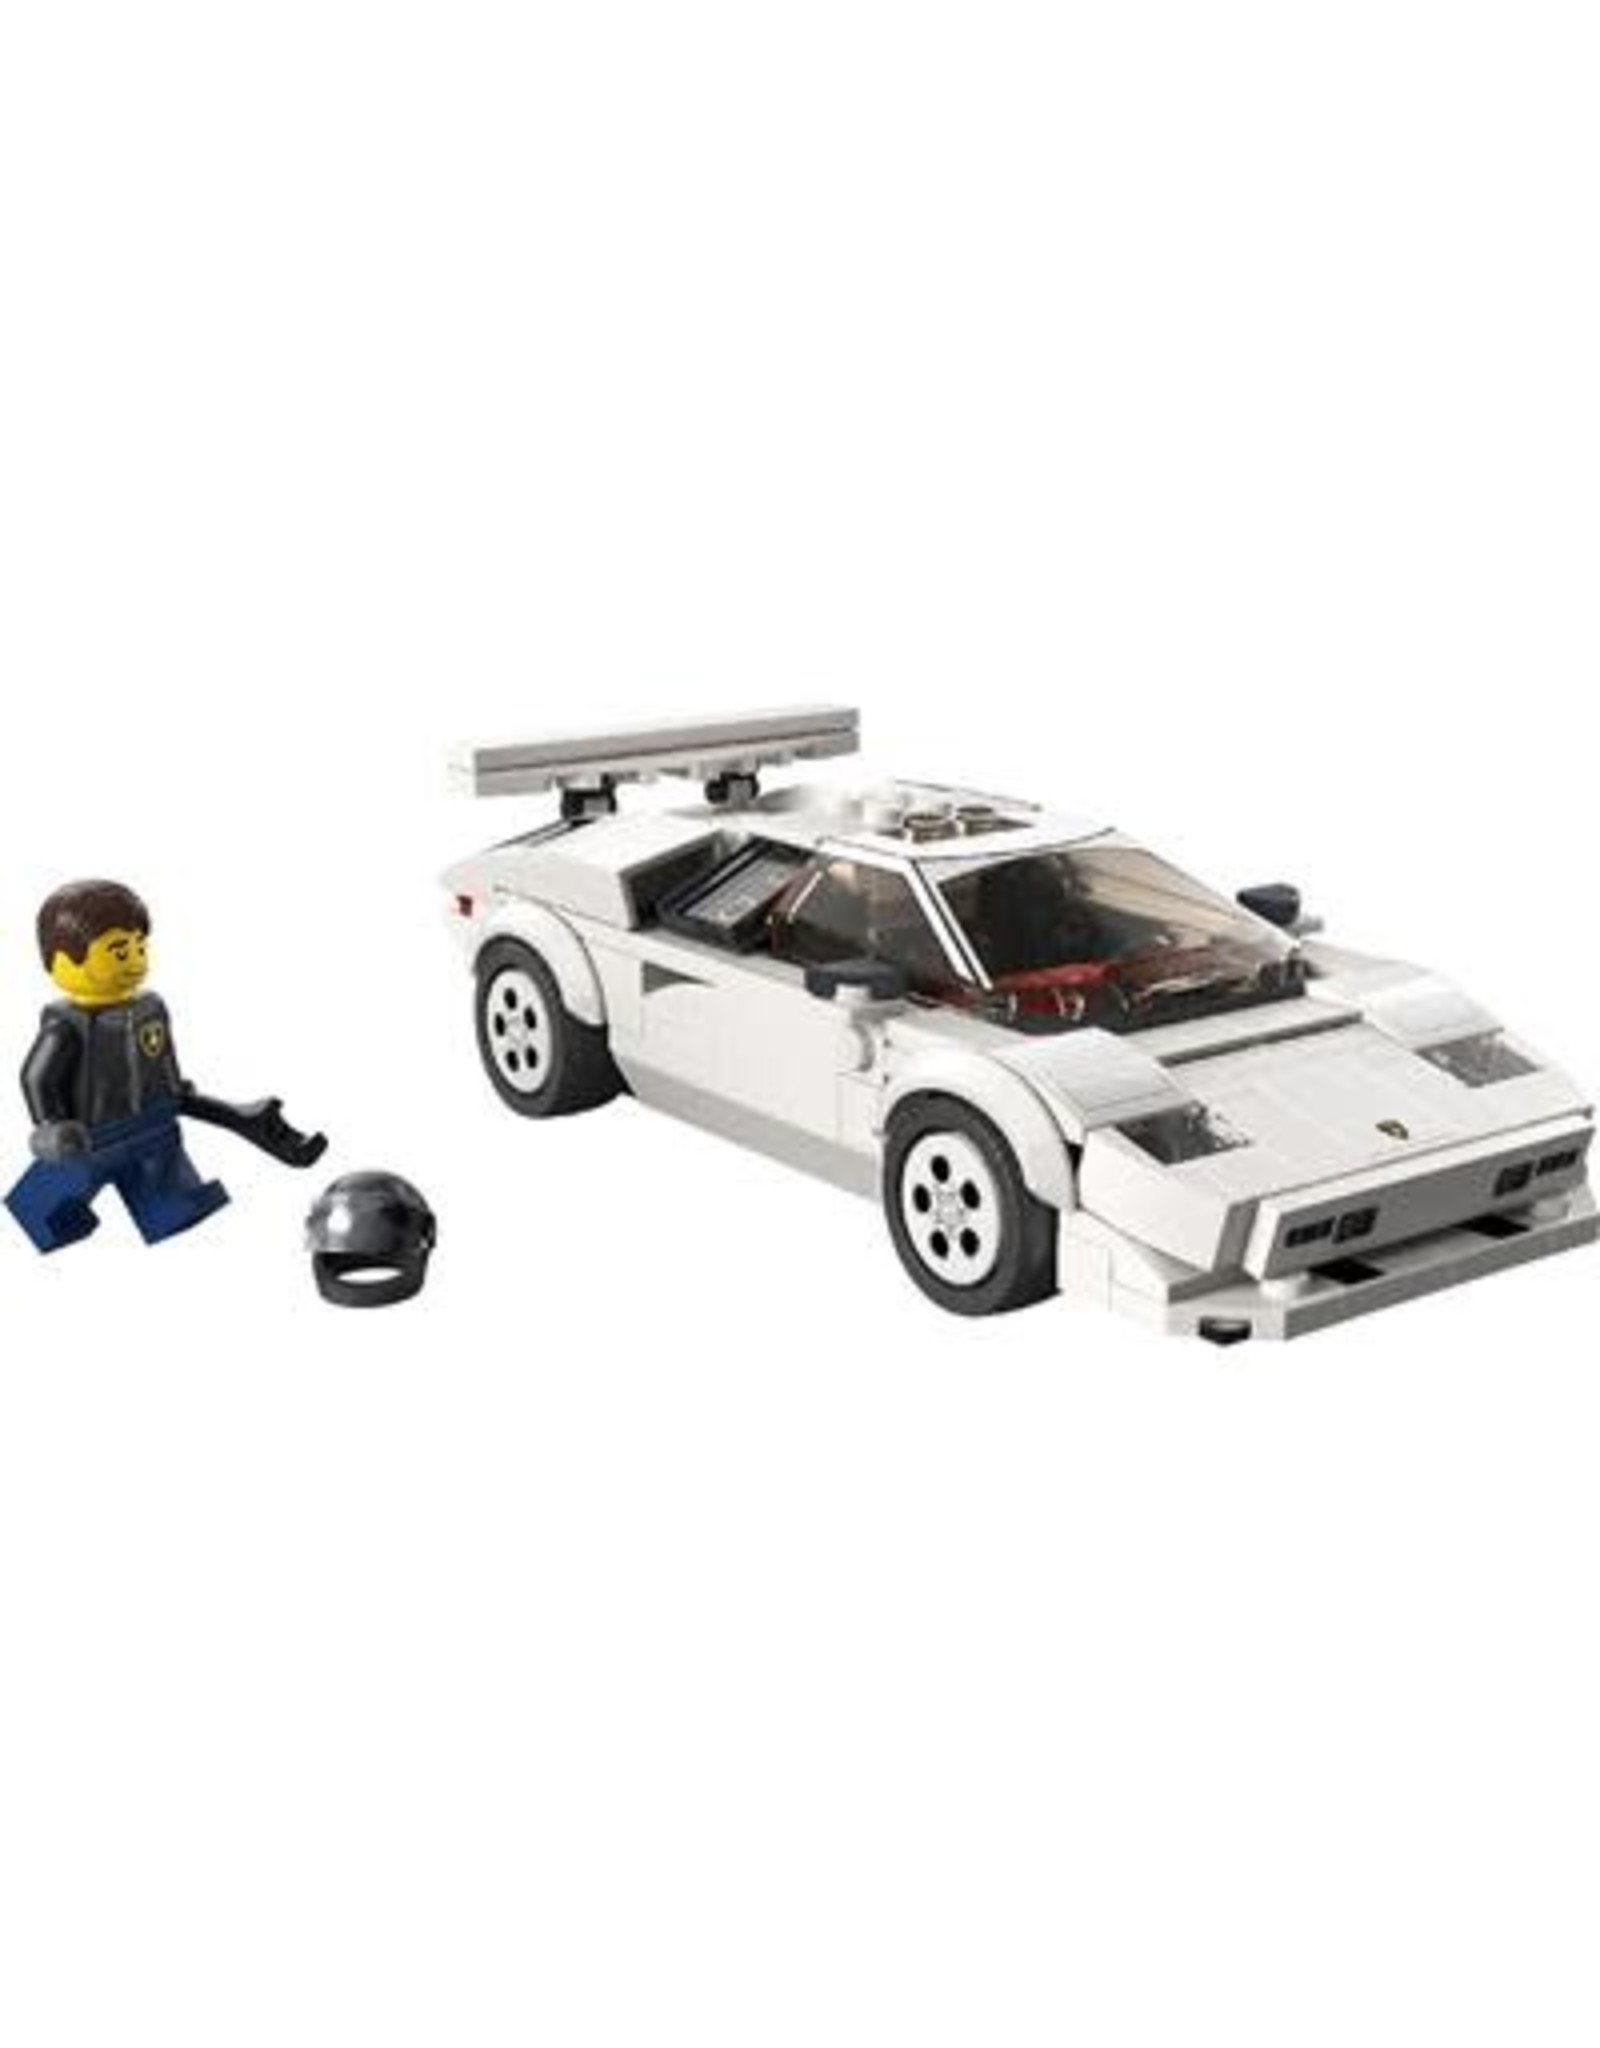 LEGO Lego  Speed Champions 76908 Lamborghini Countach